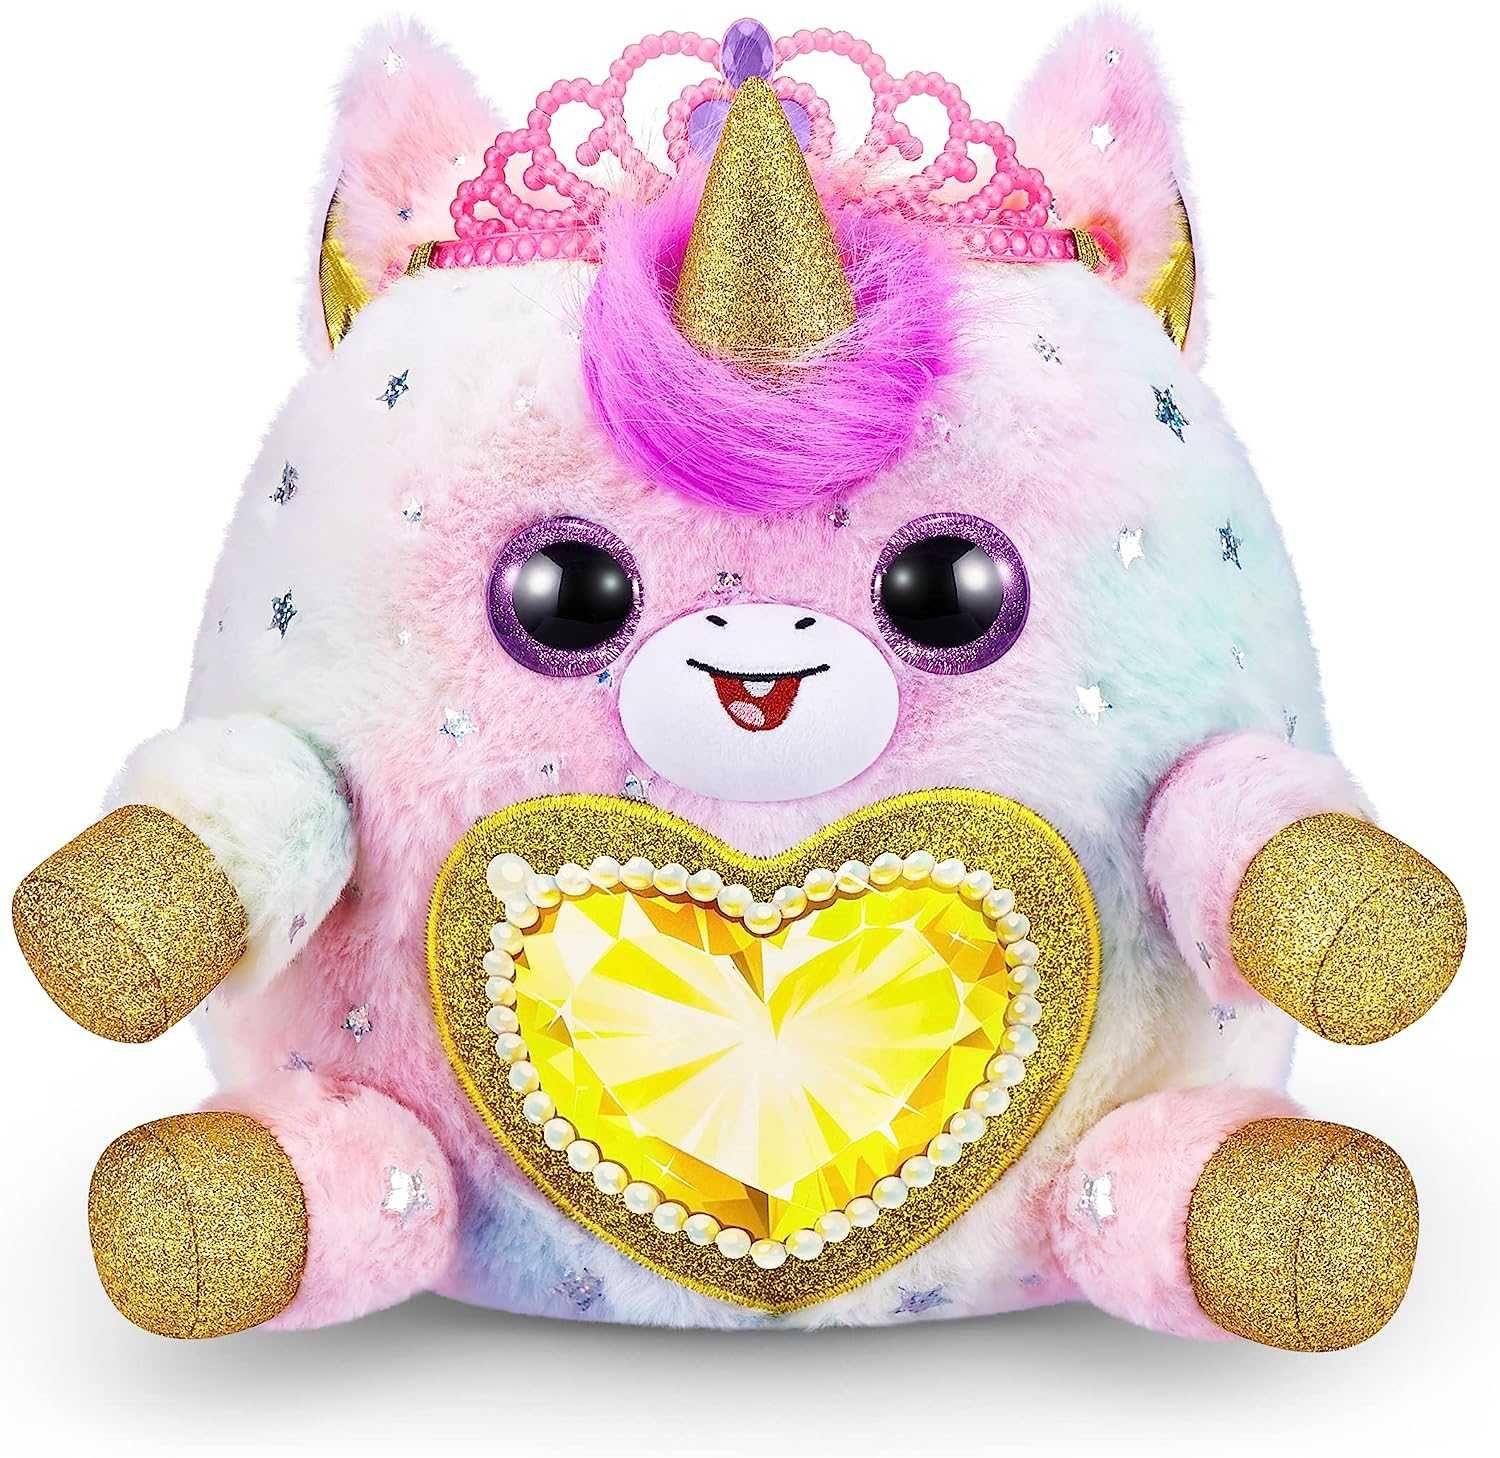 М'яка іграшка-сюрприз Rainbocorns  Fairycorn Princess